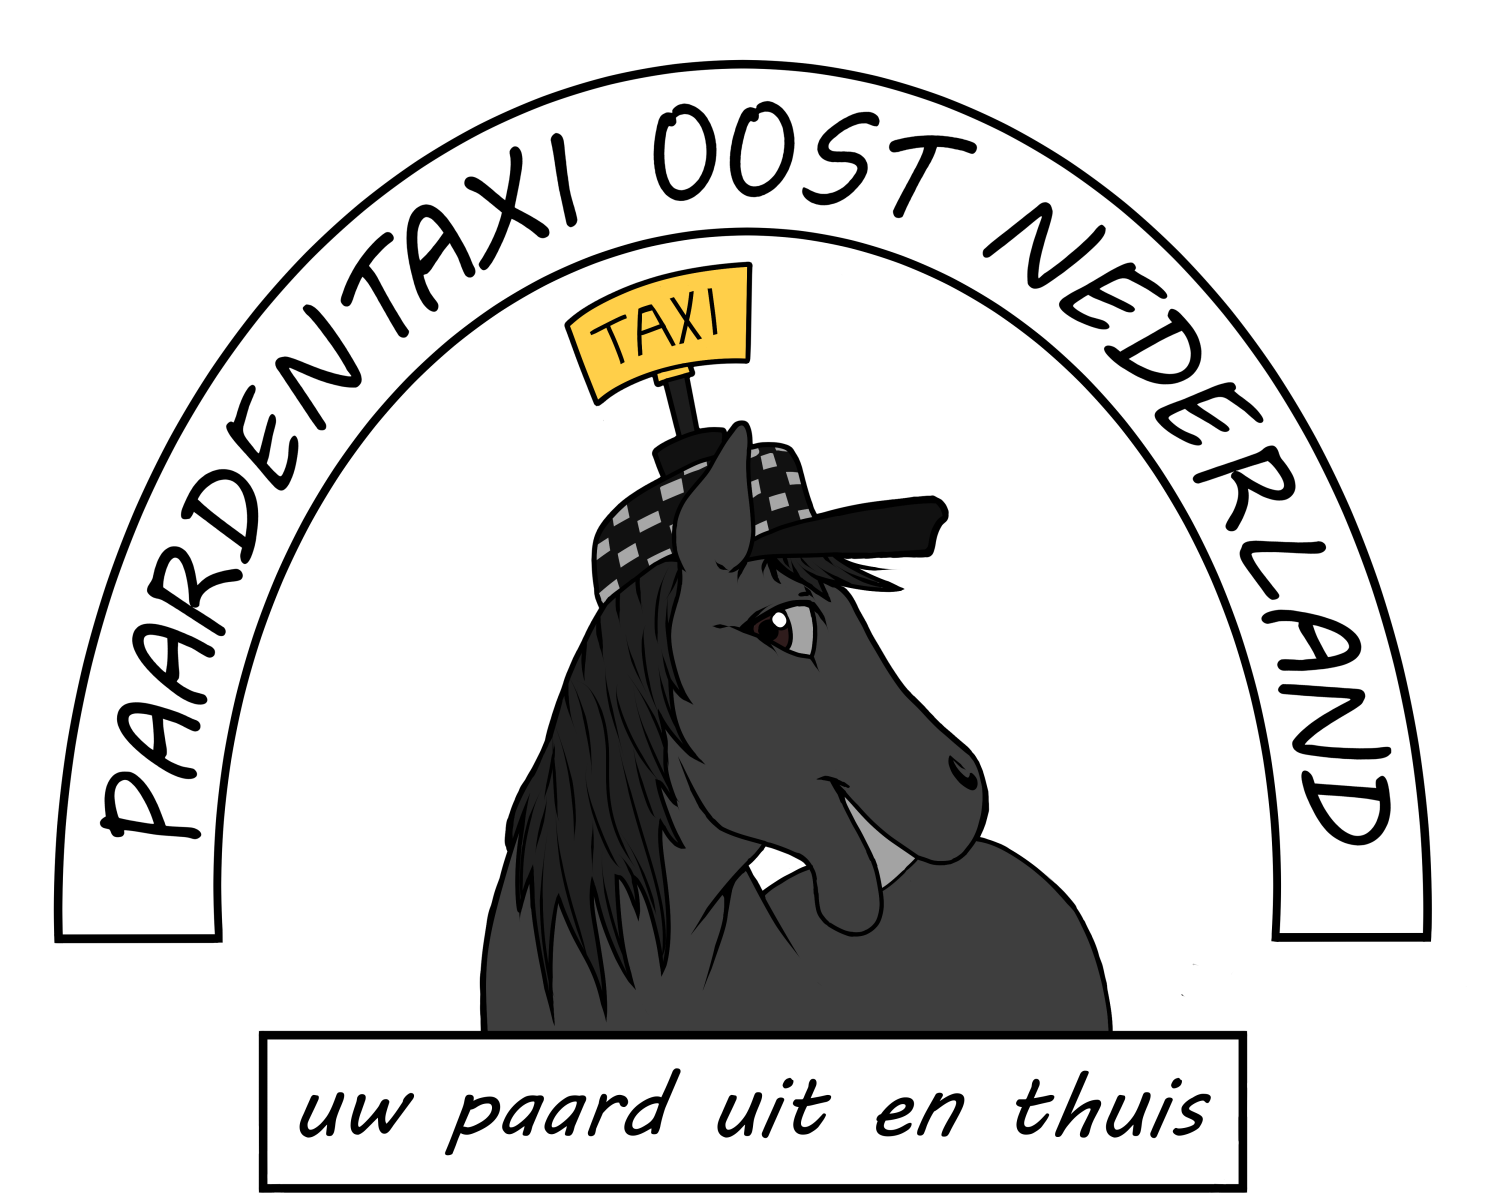 Paardentaxi Oost Nederland